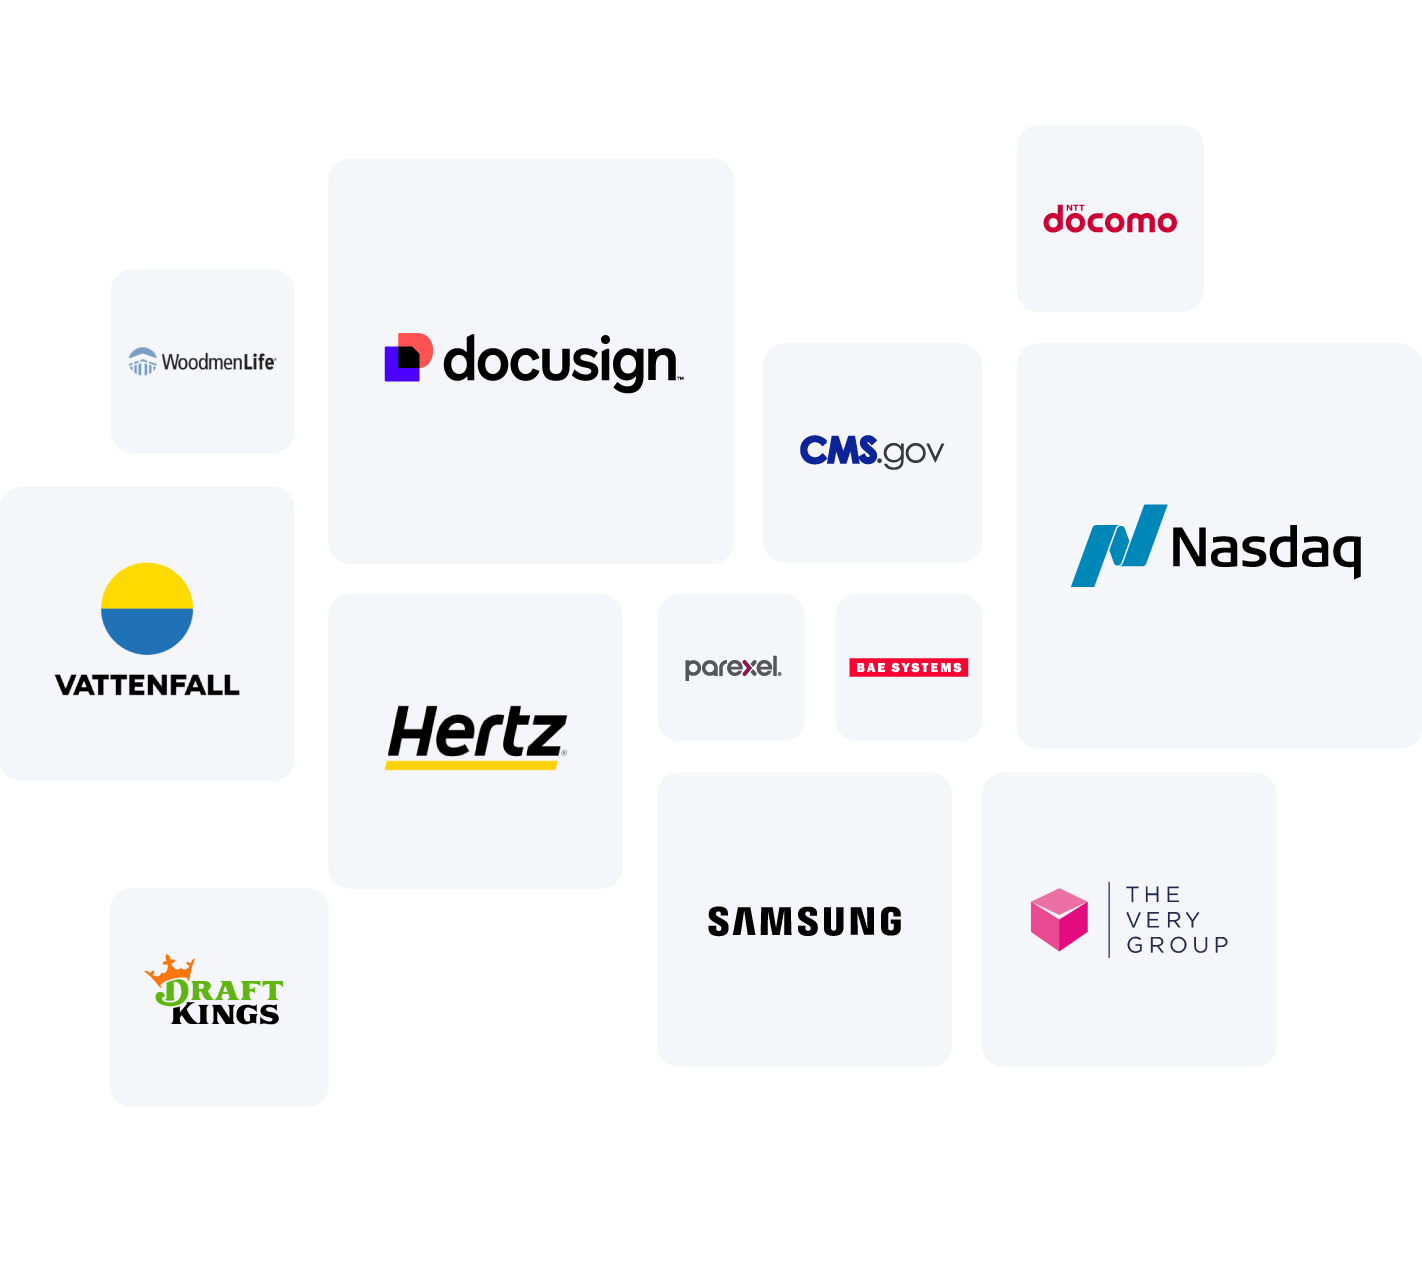 Logos for Vattenfall, WoodmenLife, Draft Kings, Docusign, Hertz, CMS.gov, Parexel, Samsung, NTT docomo, Nasdaq, and The Very Group